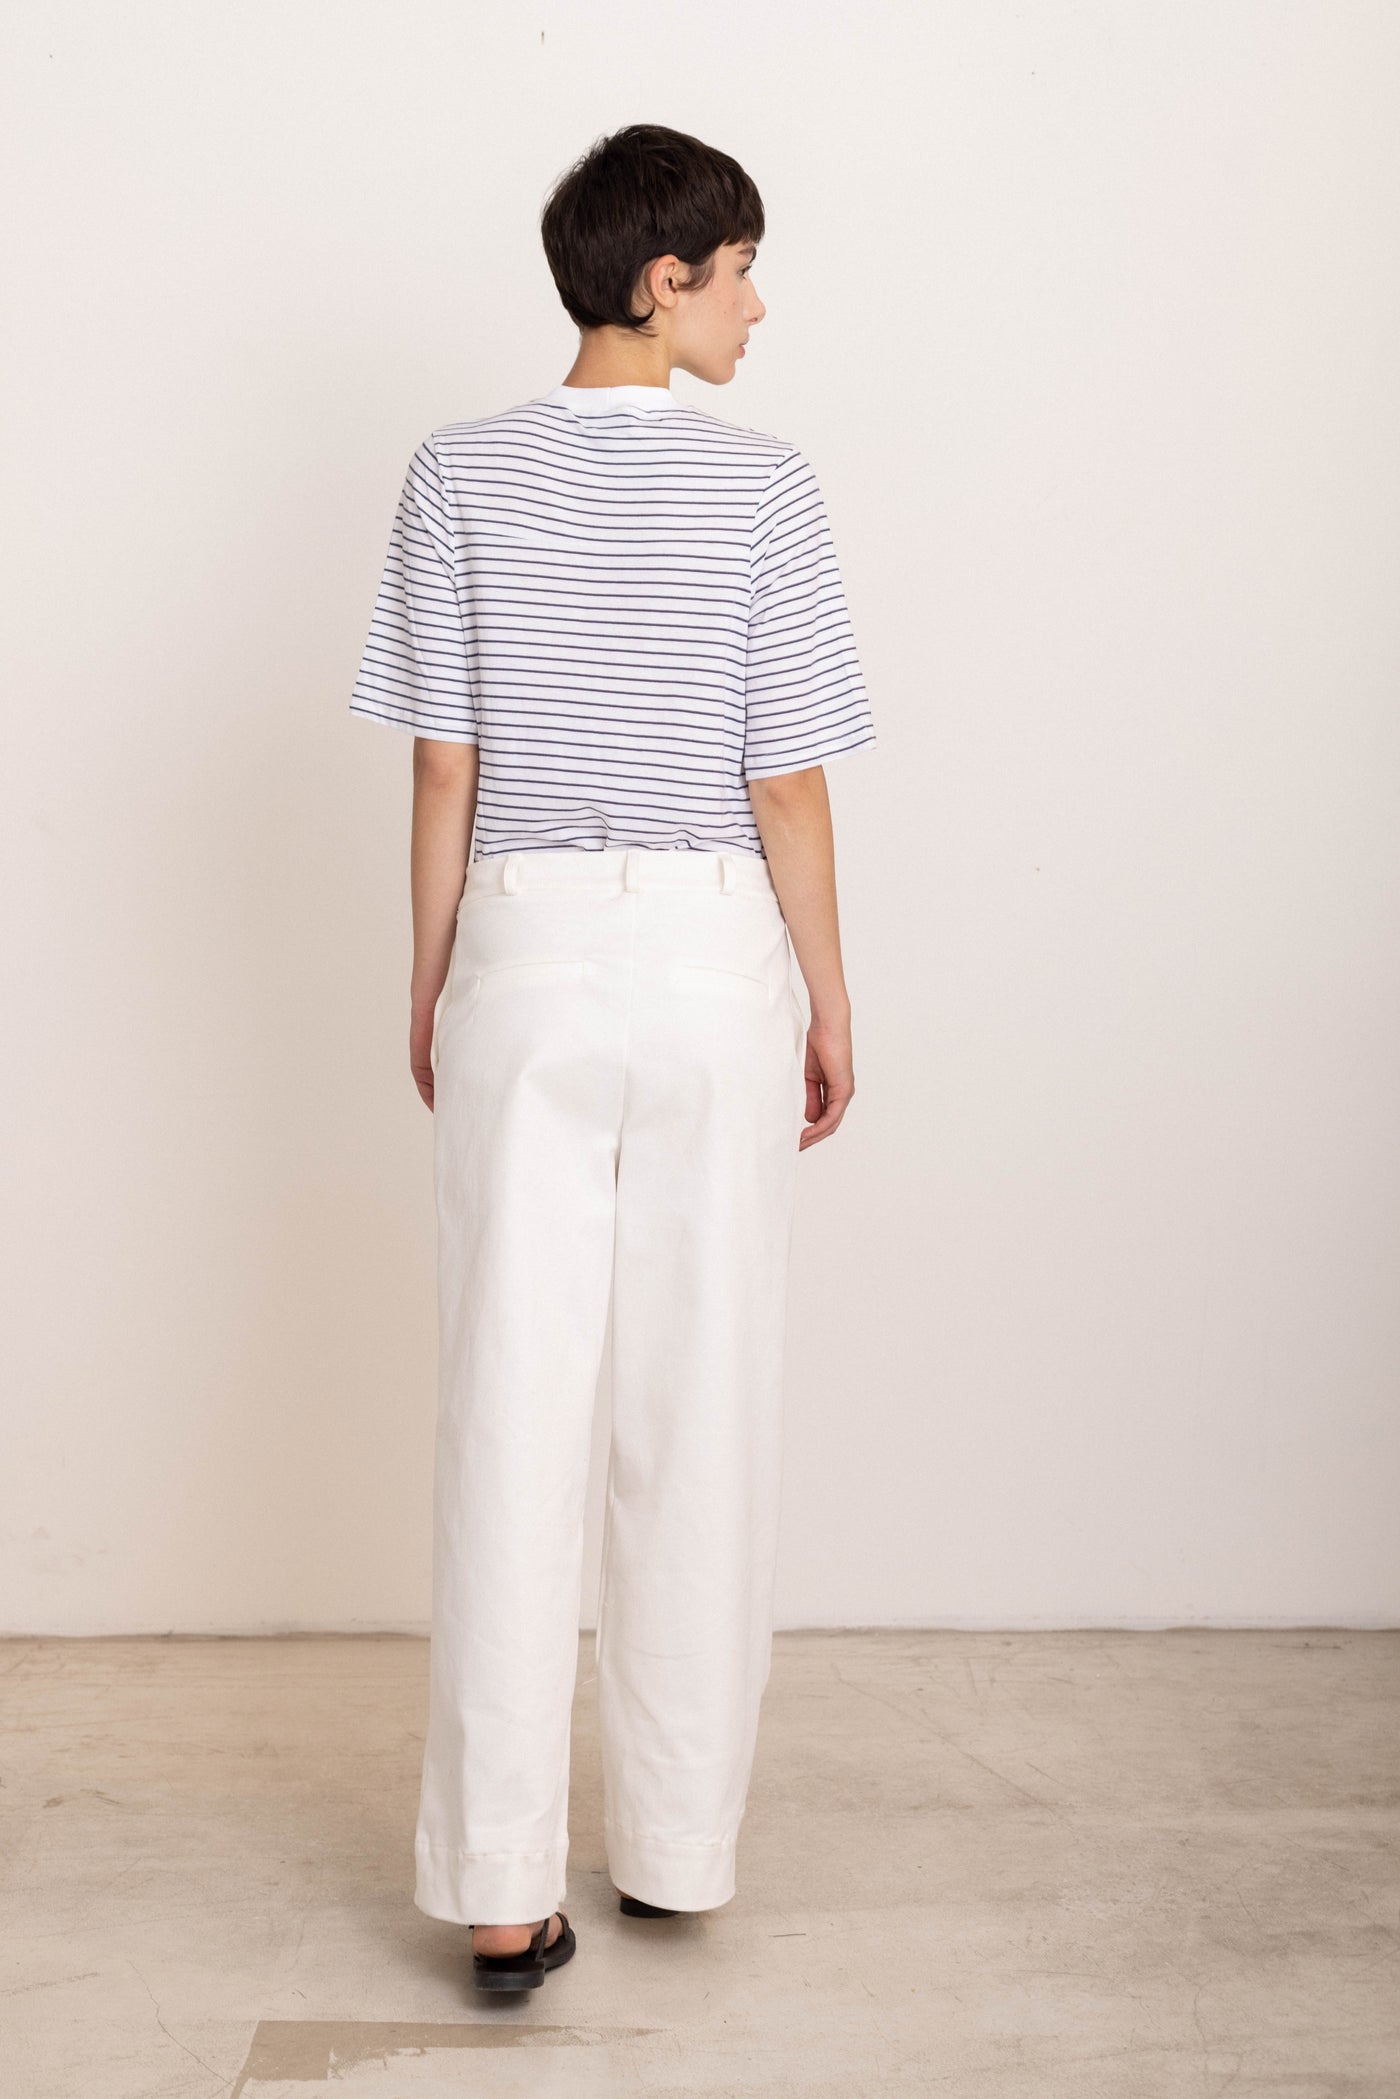 Franco T Shirt Bodysuit - Stripes